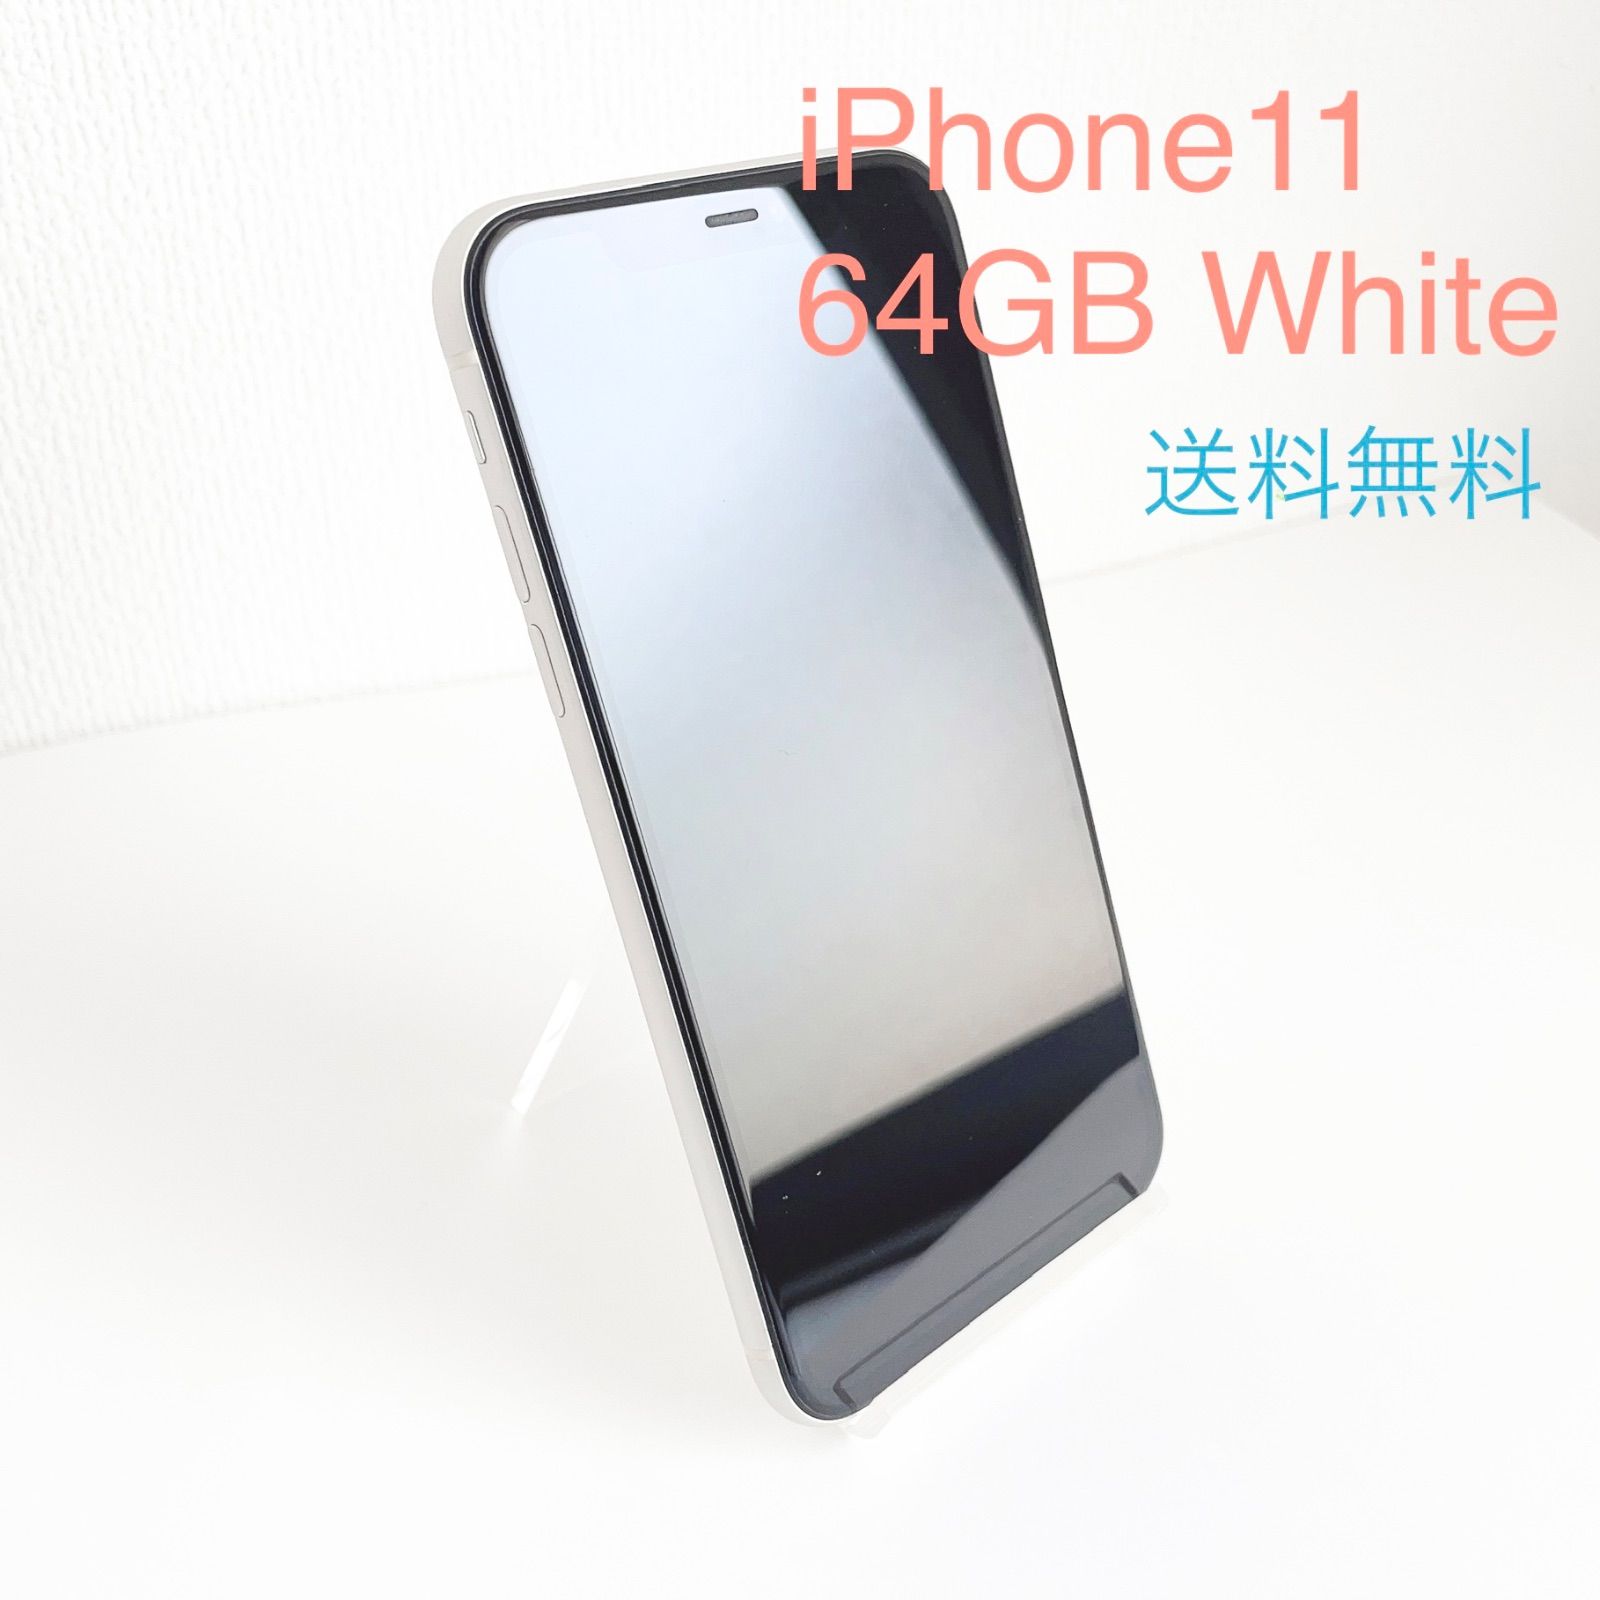 iPhone11 本体 64GB white SIMフリー ホワイト 白64gb